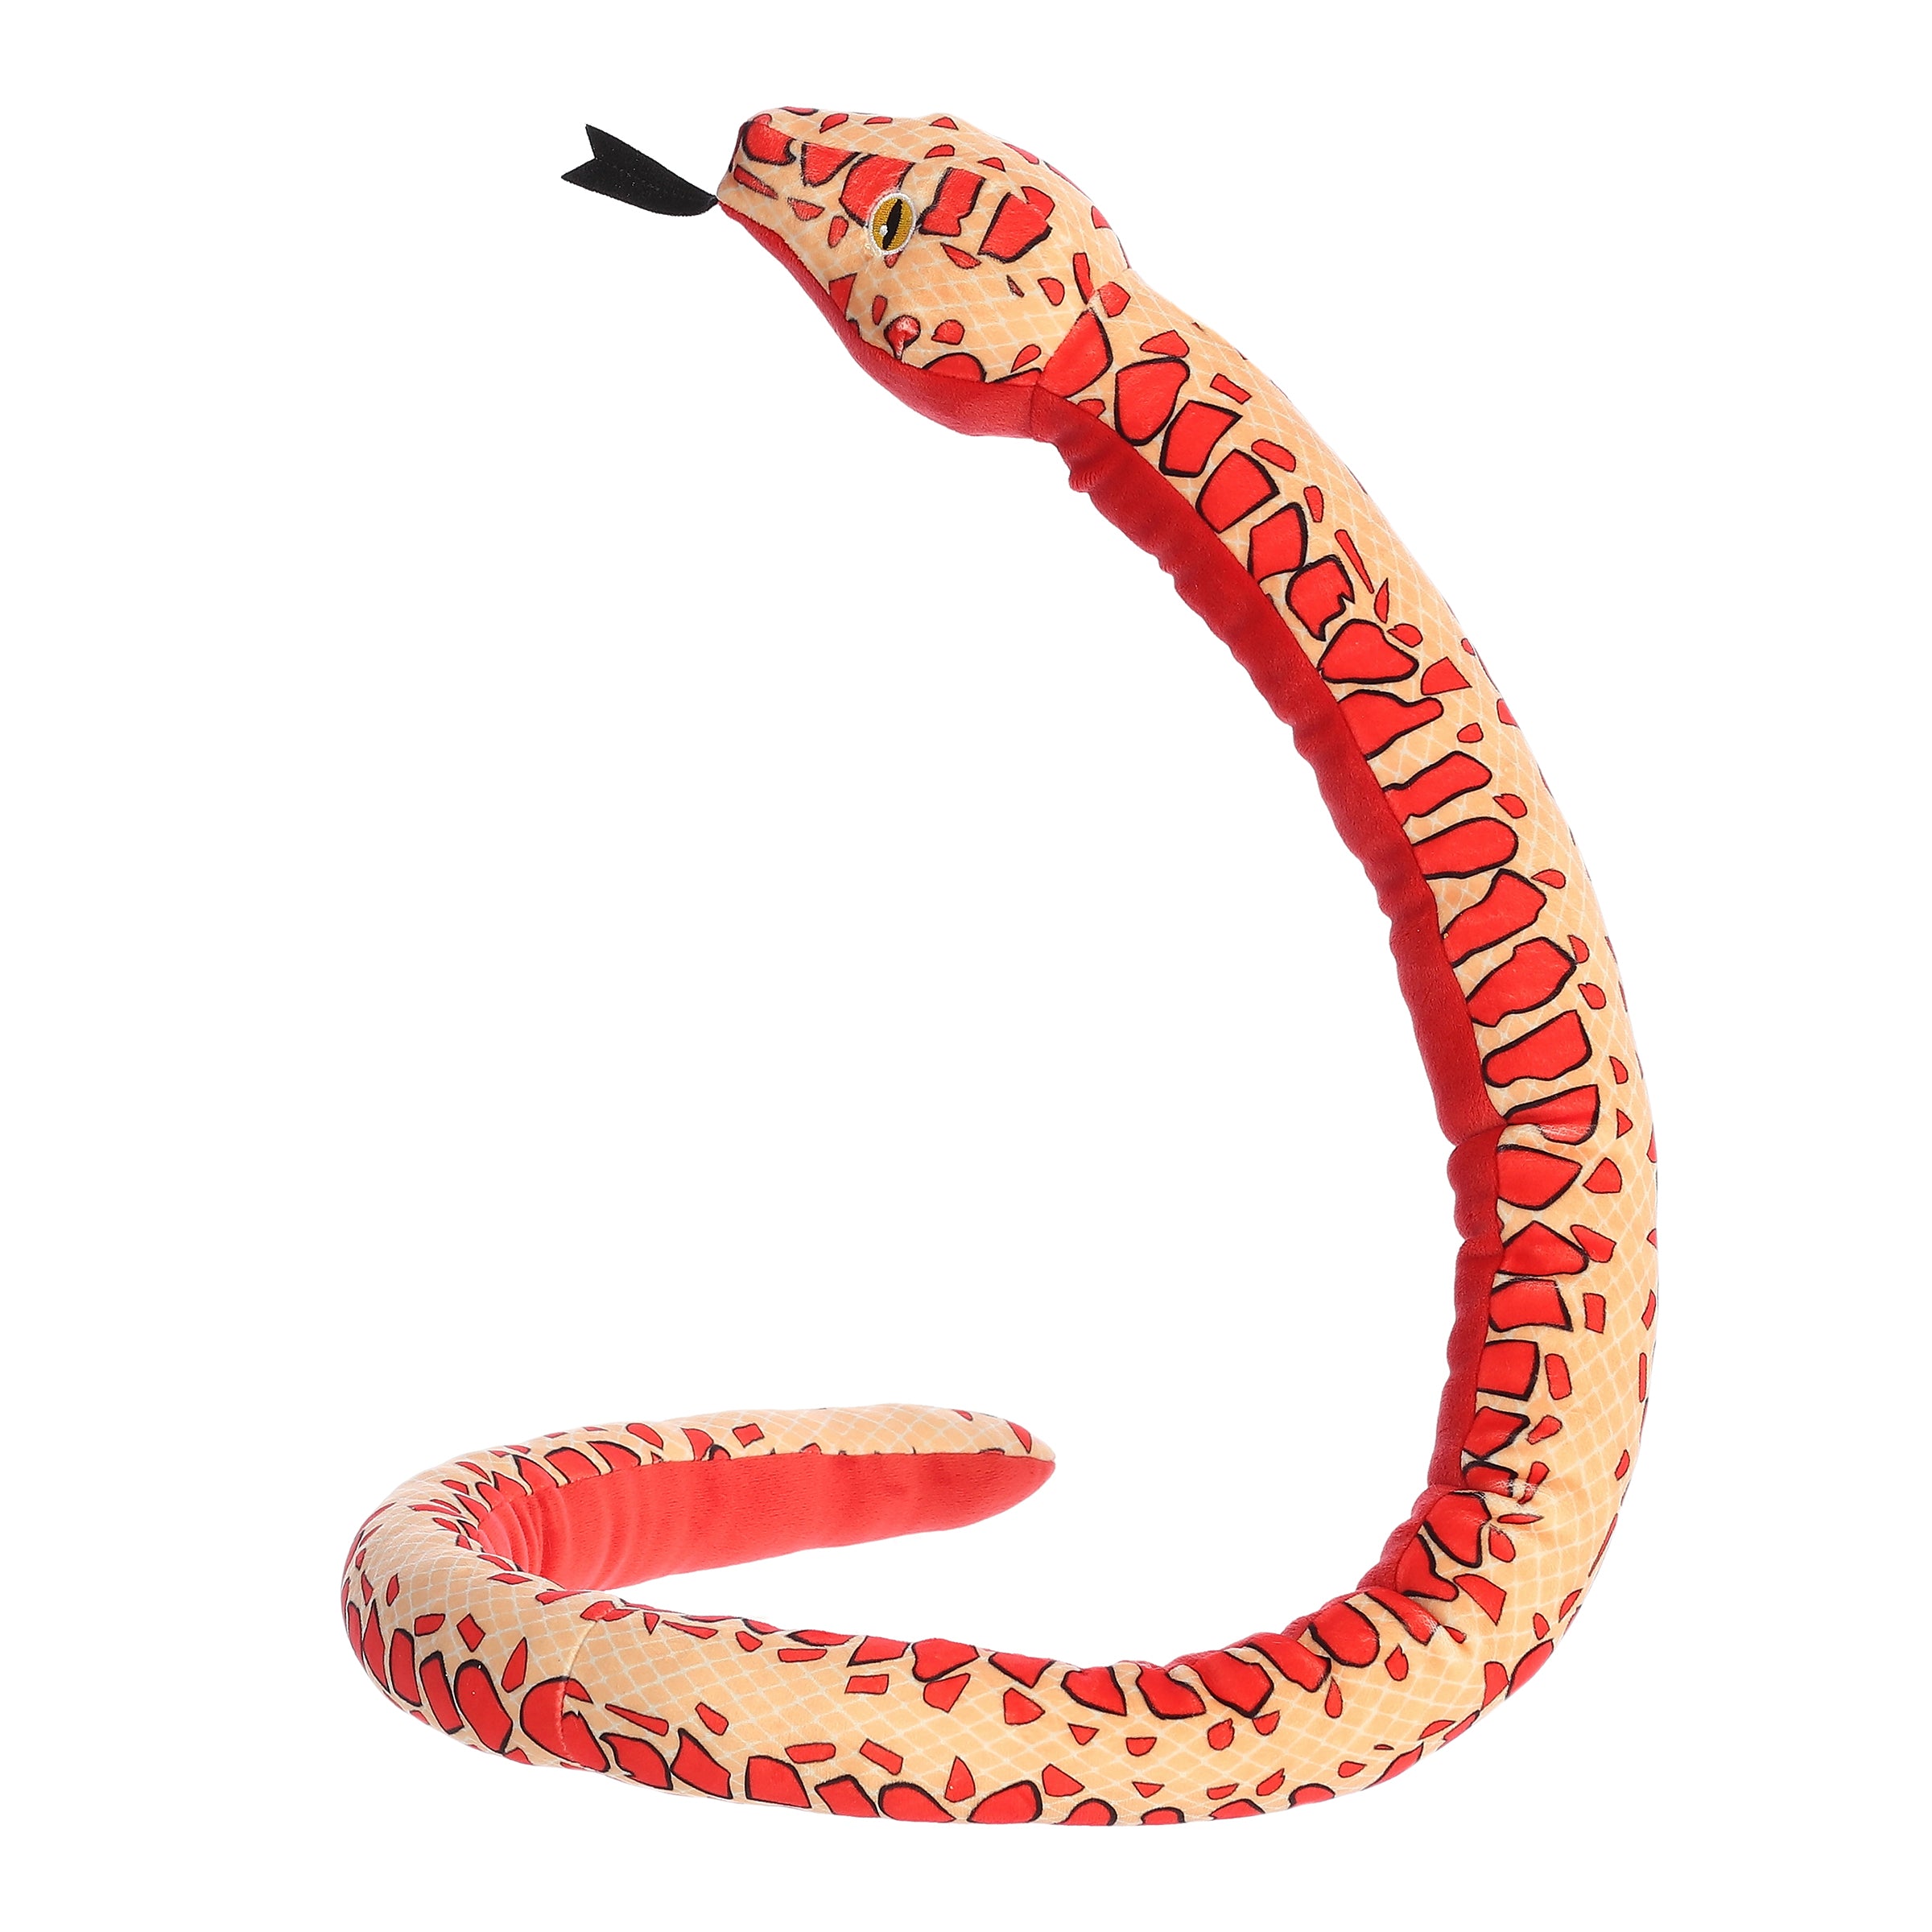 A long orange snake stuffed animal plush that has bright orange scales running along its body.